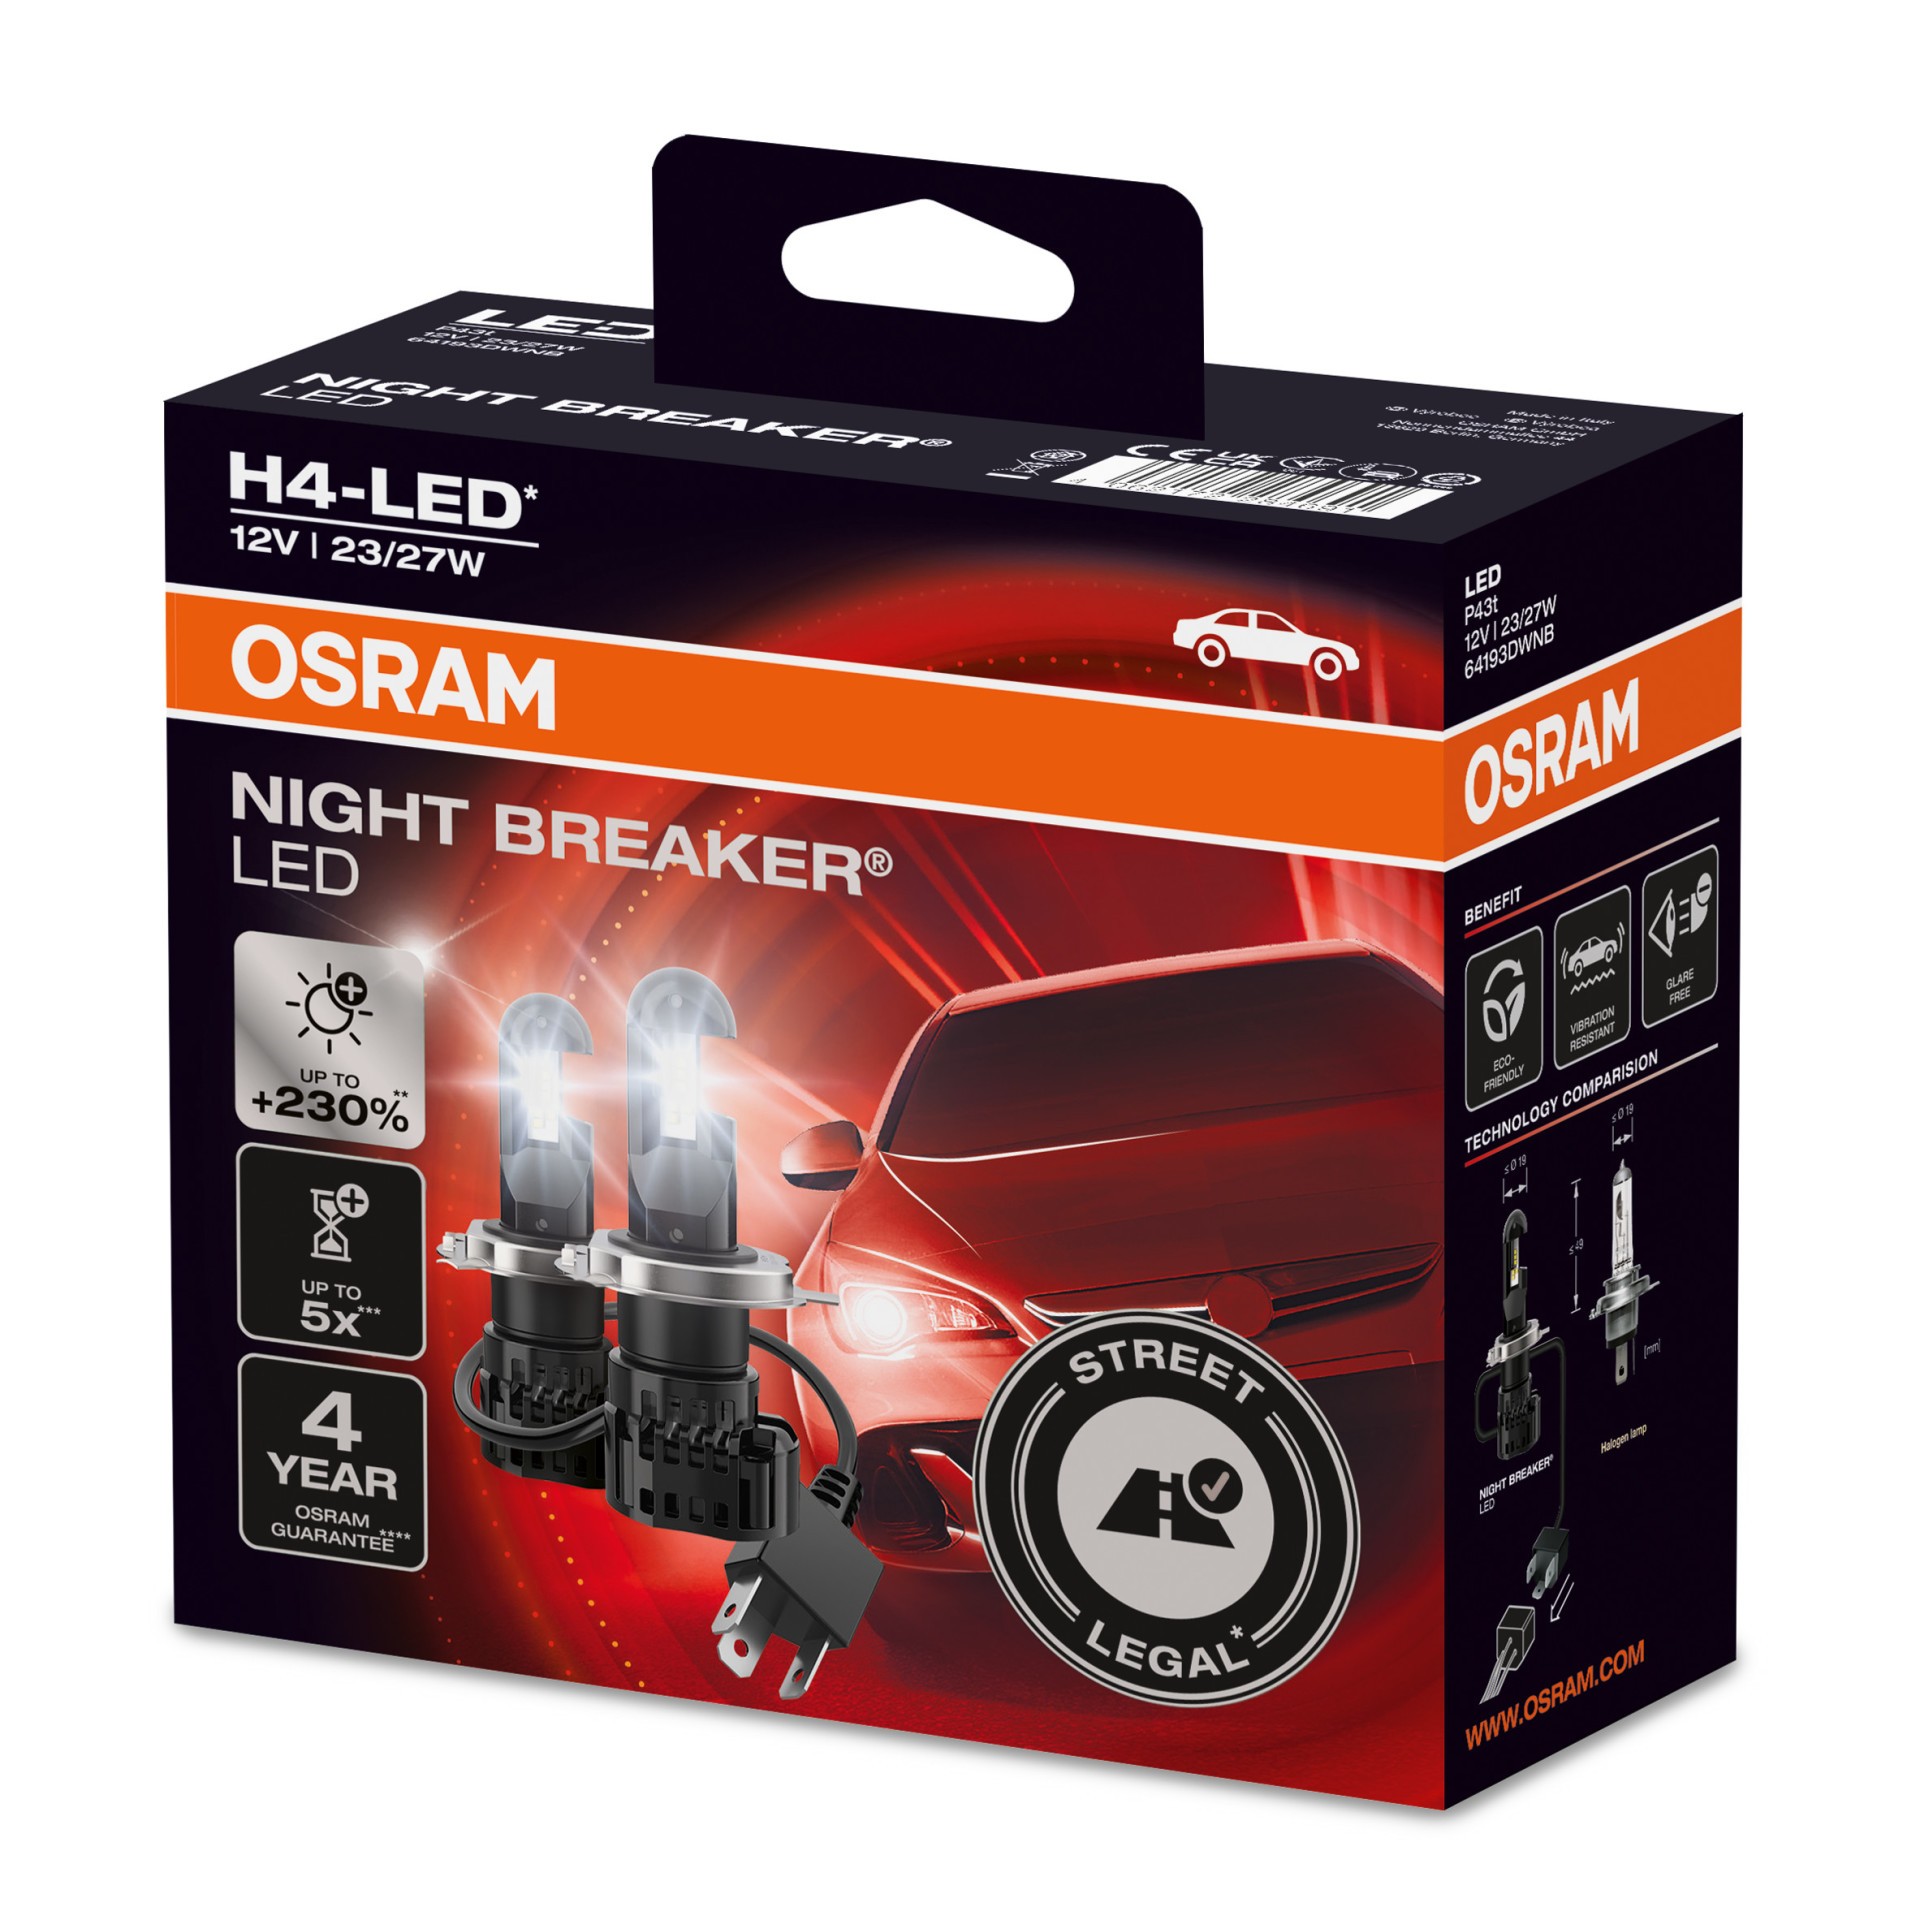 OSRAM NIGHT BREAKER® H4-LED (2stk.)